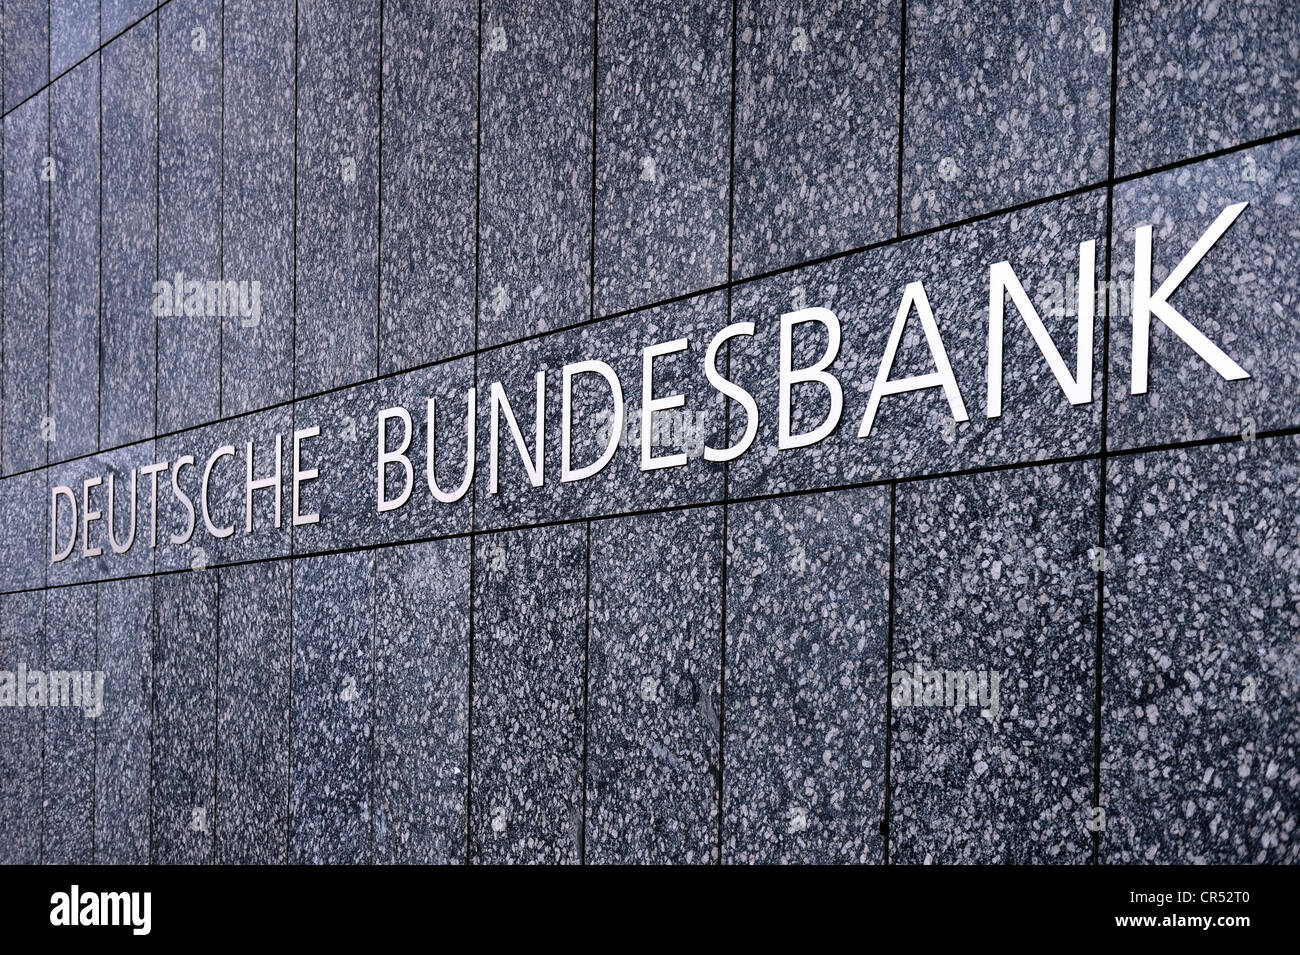 Signage, Deutsche Bundesbank, German Federal Bank in Hamburg, Germany, Europe Stock Photo